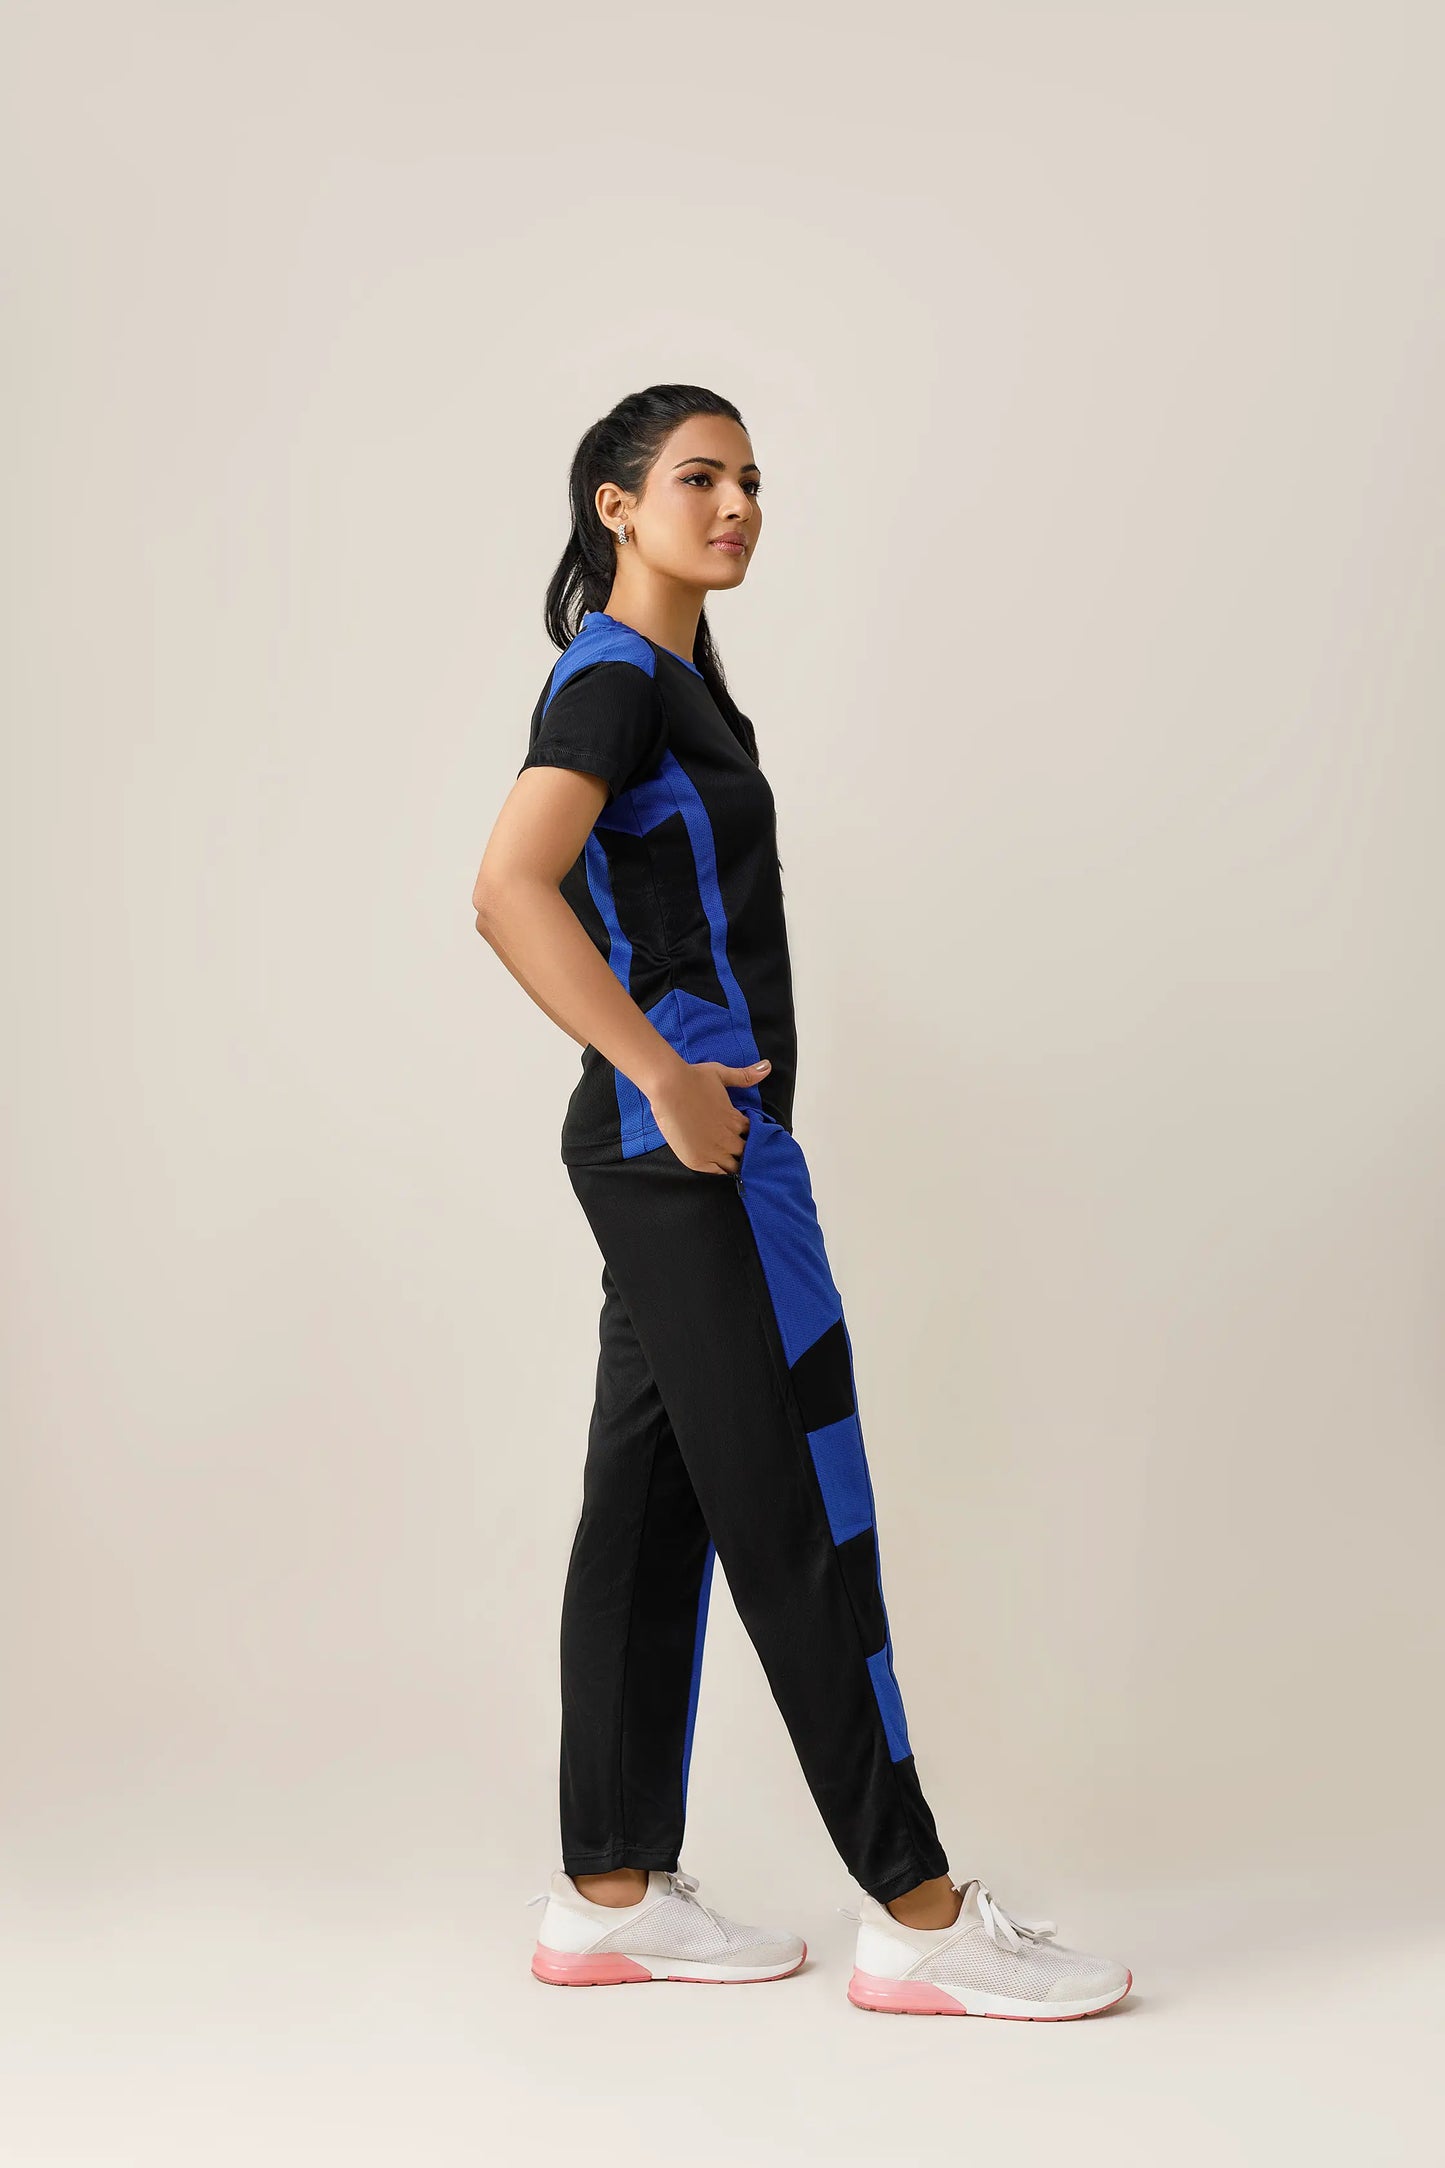 Animal Instinct Activewear Tracksuit (Black and Royal Blue)